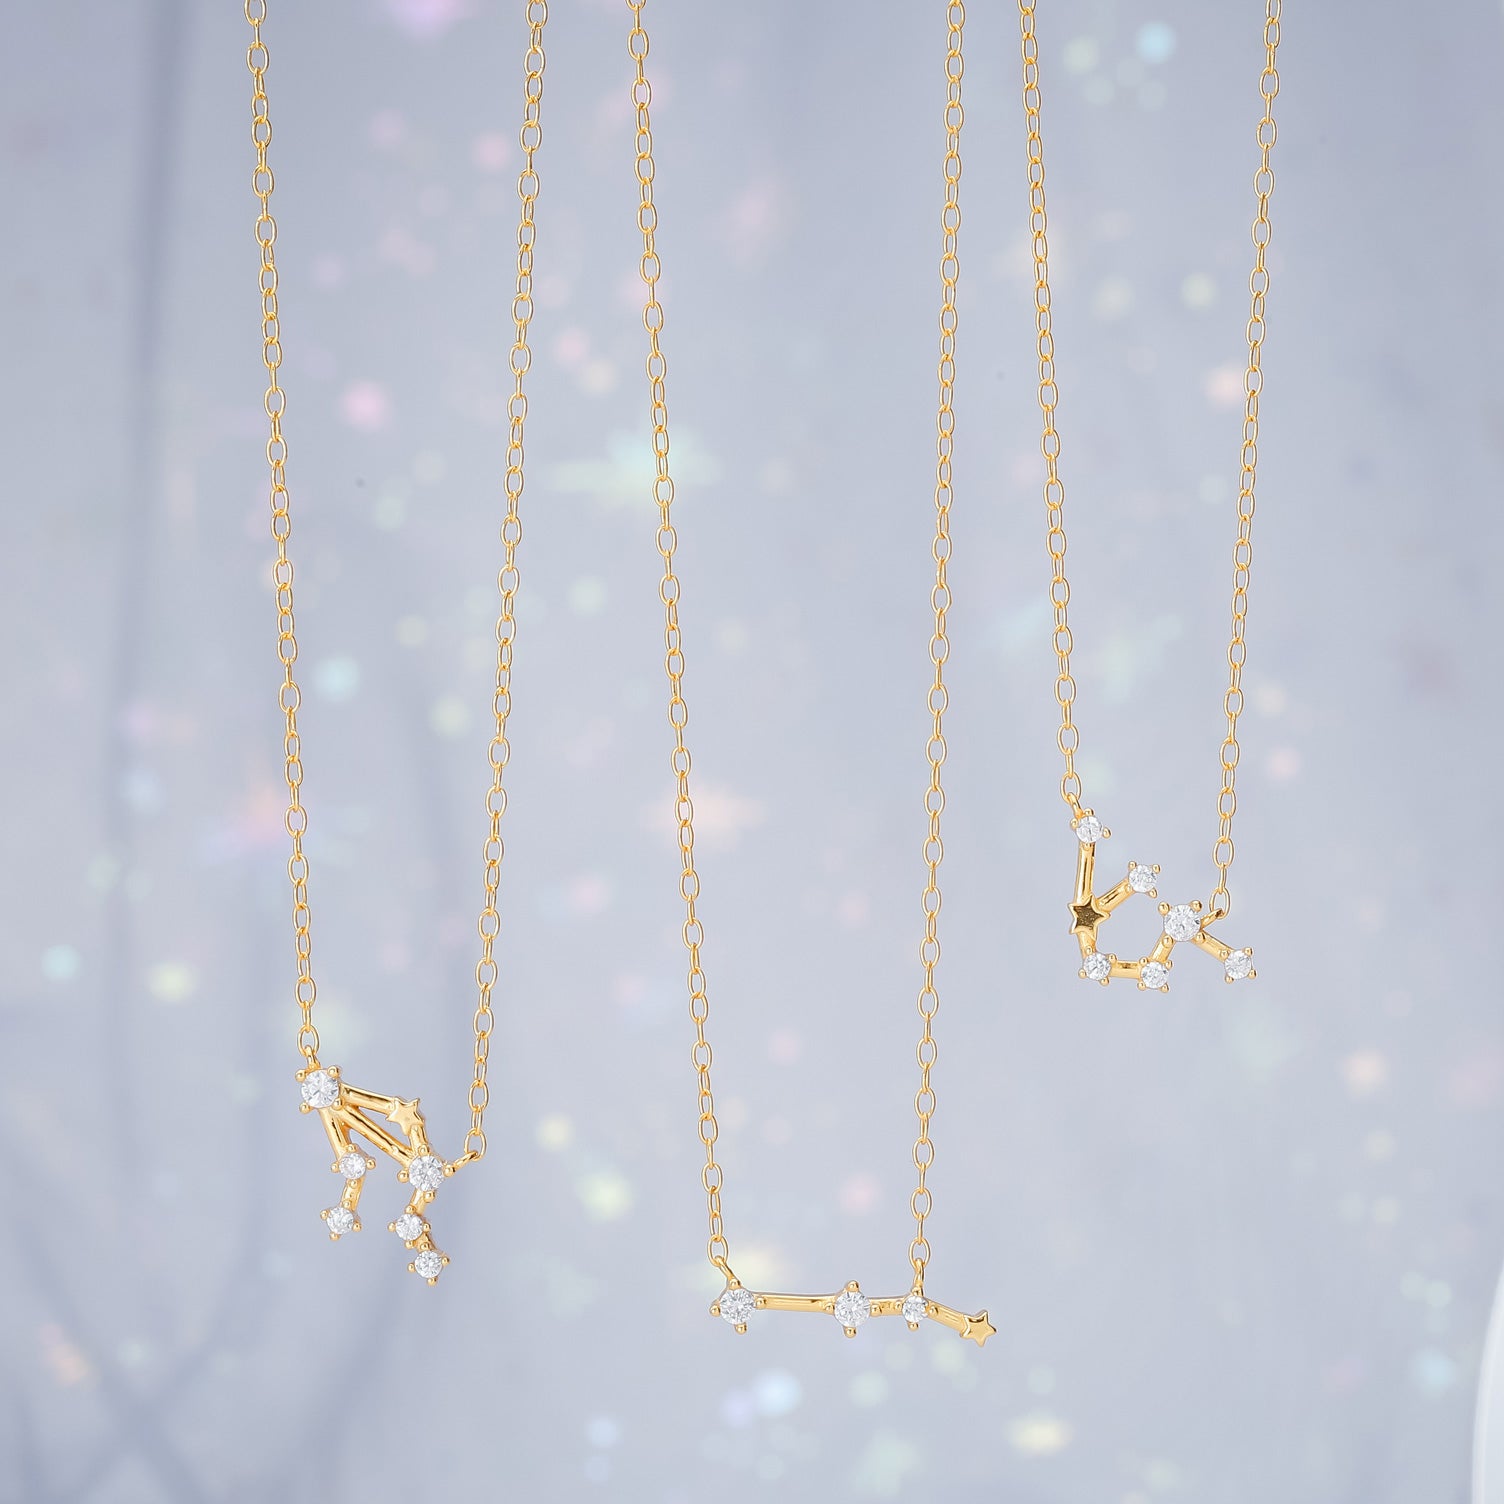 Silver Aquarius Constellation Necklace Set